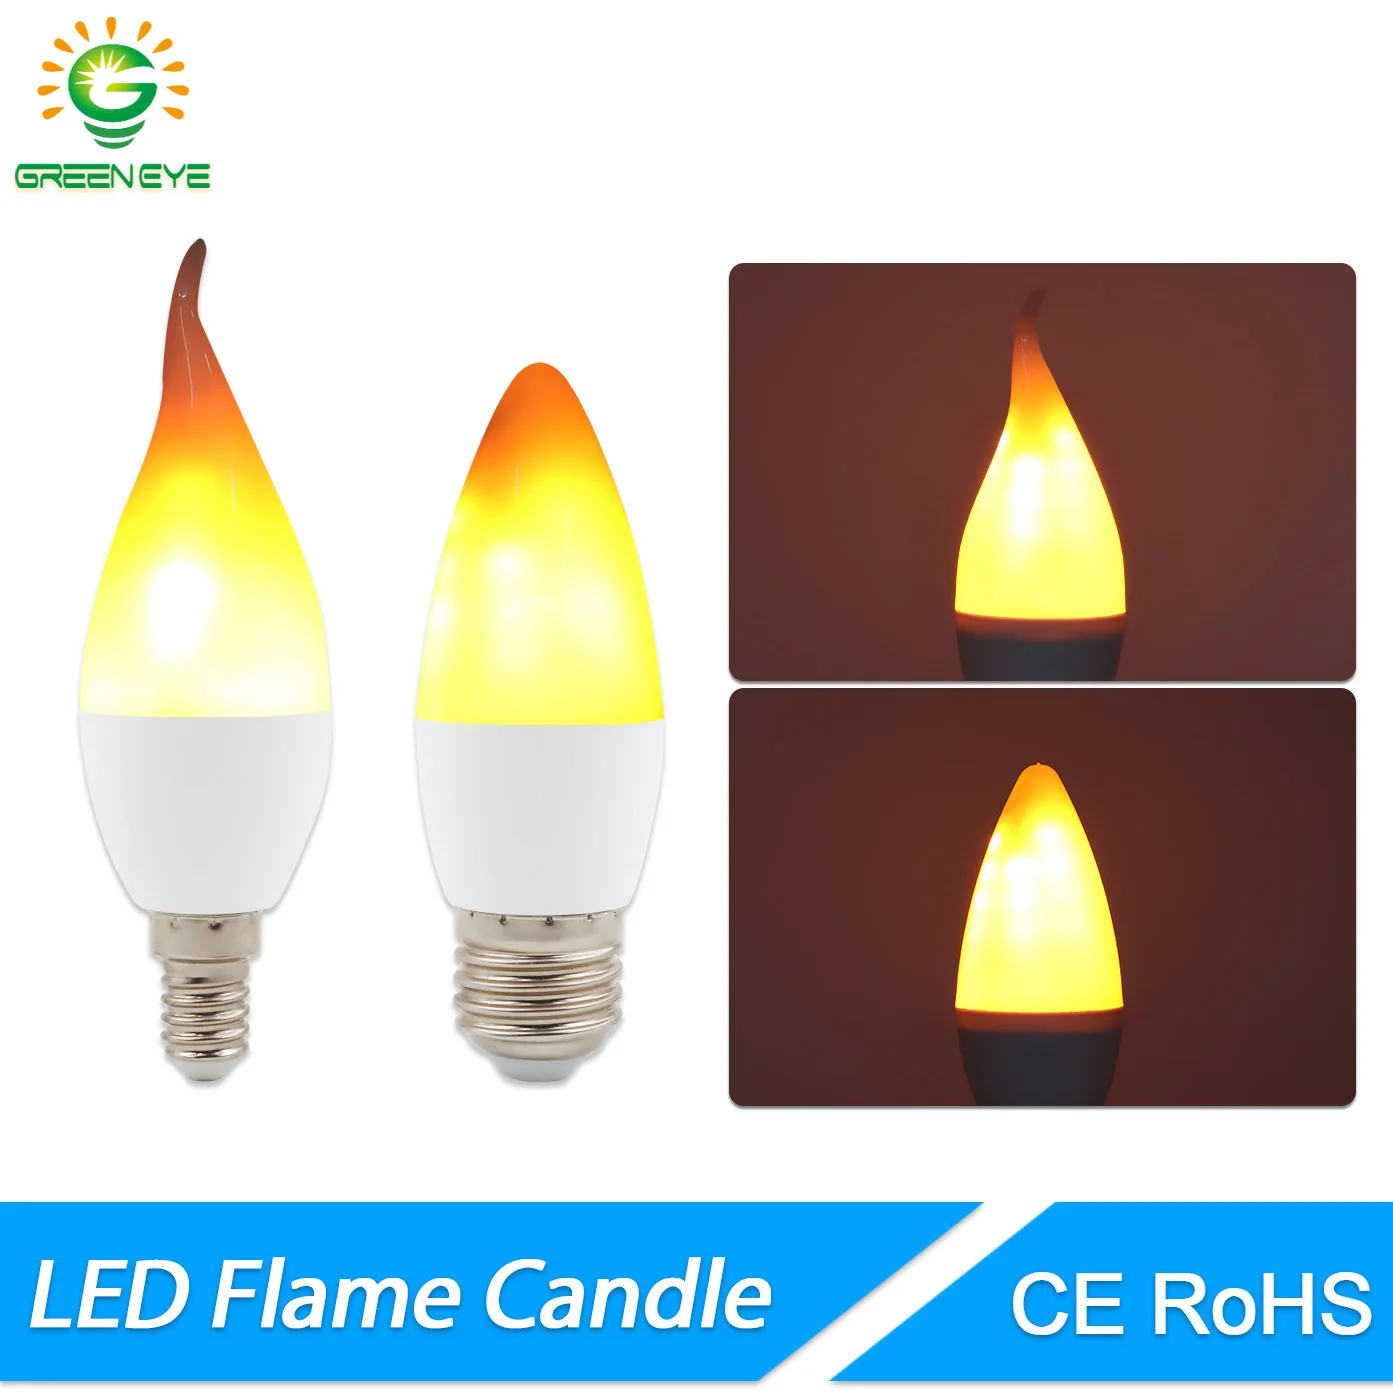 

E27 Led Simulated Flame Bulbs 3W 9W E14 AC85-265V lamp Corn Bulb Flickering LED candle Light Dynamic Flame Effect for Home Light